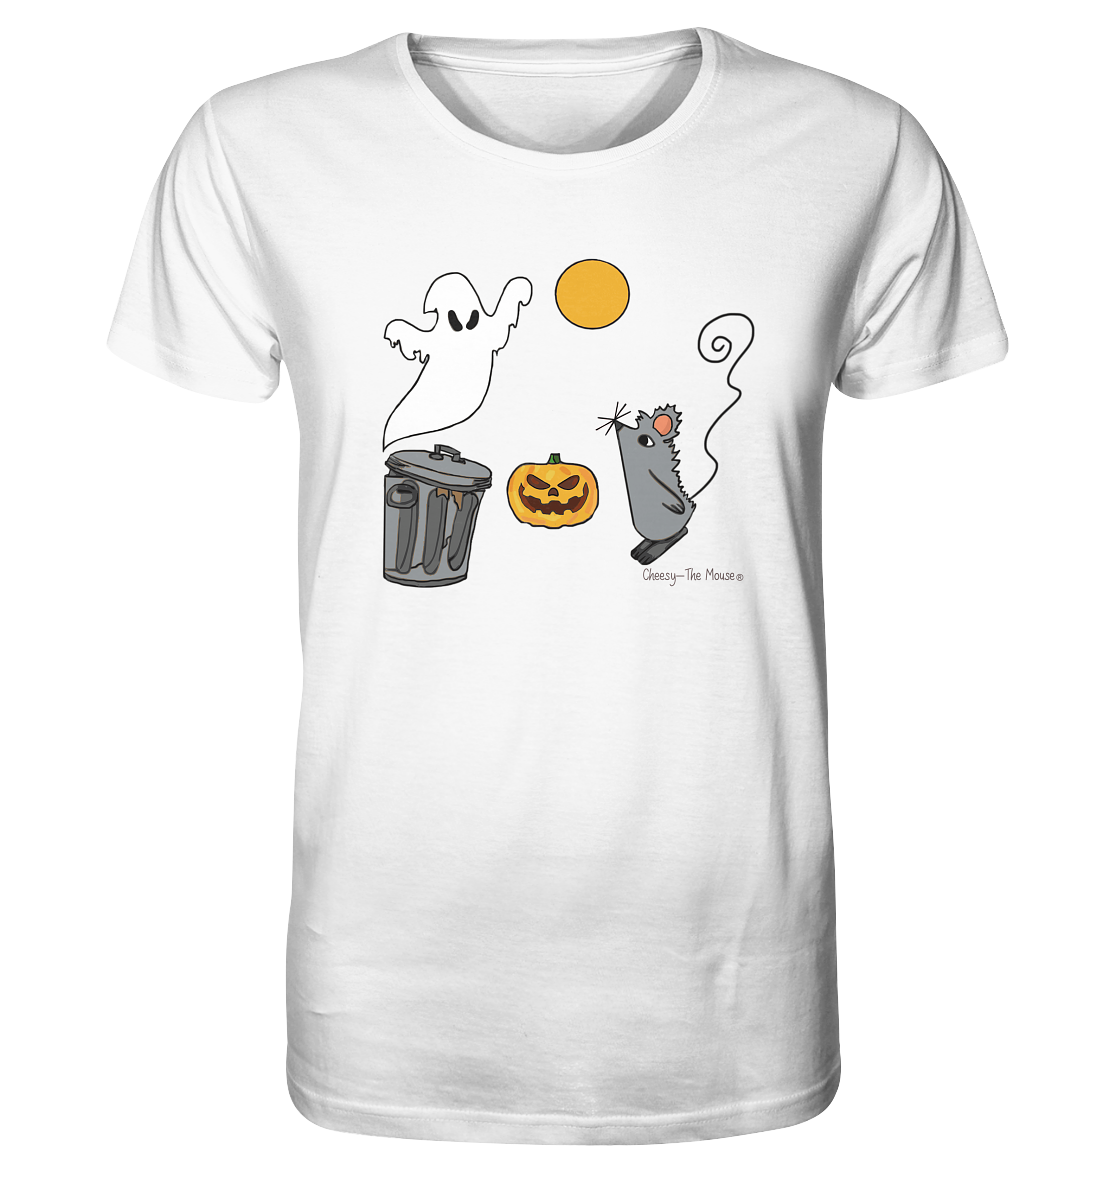 Cheesy -The Mouse® Halloween Midnight Meeting - Organic Shirt